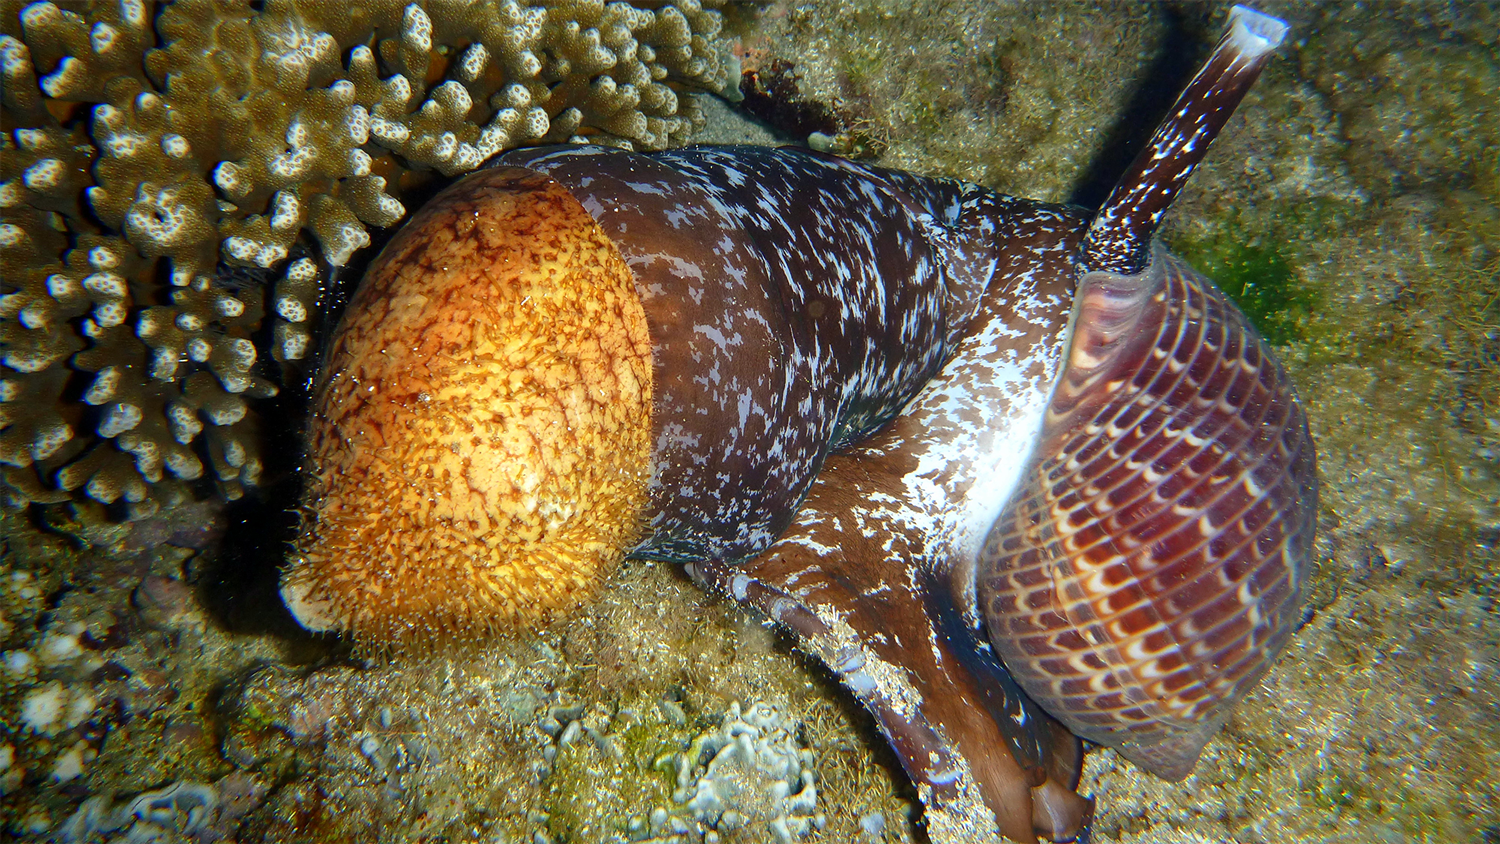 Photograph of a partridge tun snail (Tonna perdix) consuming a sea cucumber at night